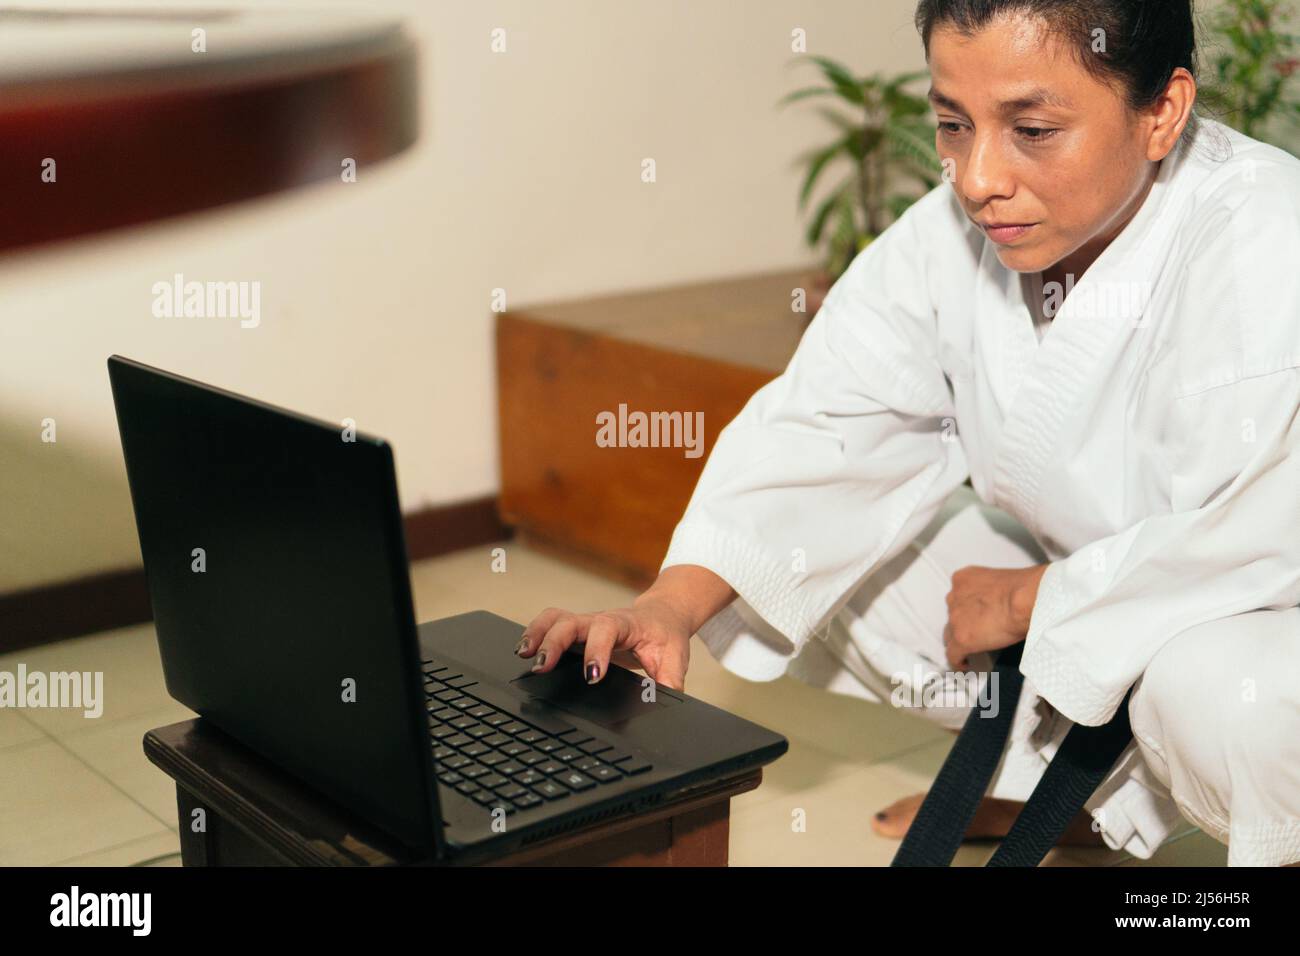 Hispanic Woman preparing computer for karate class at home Stock Photo